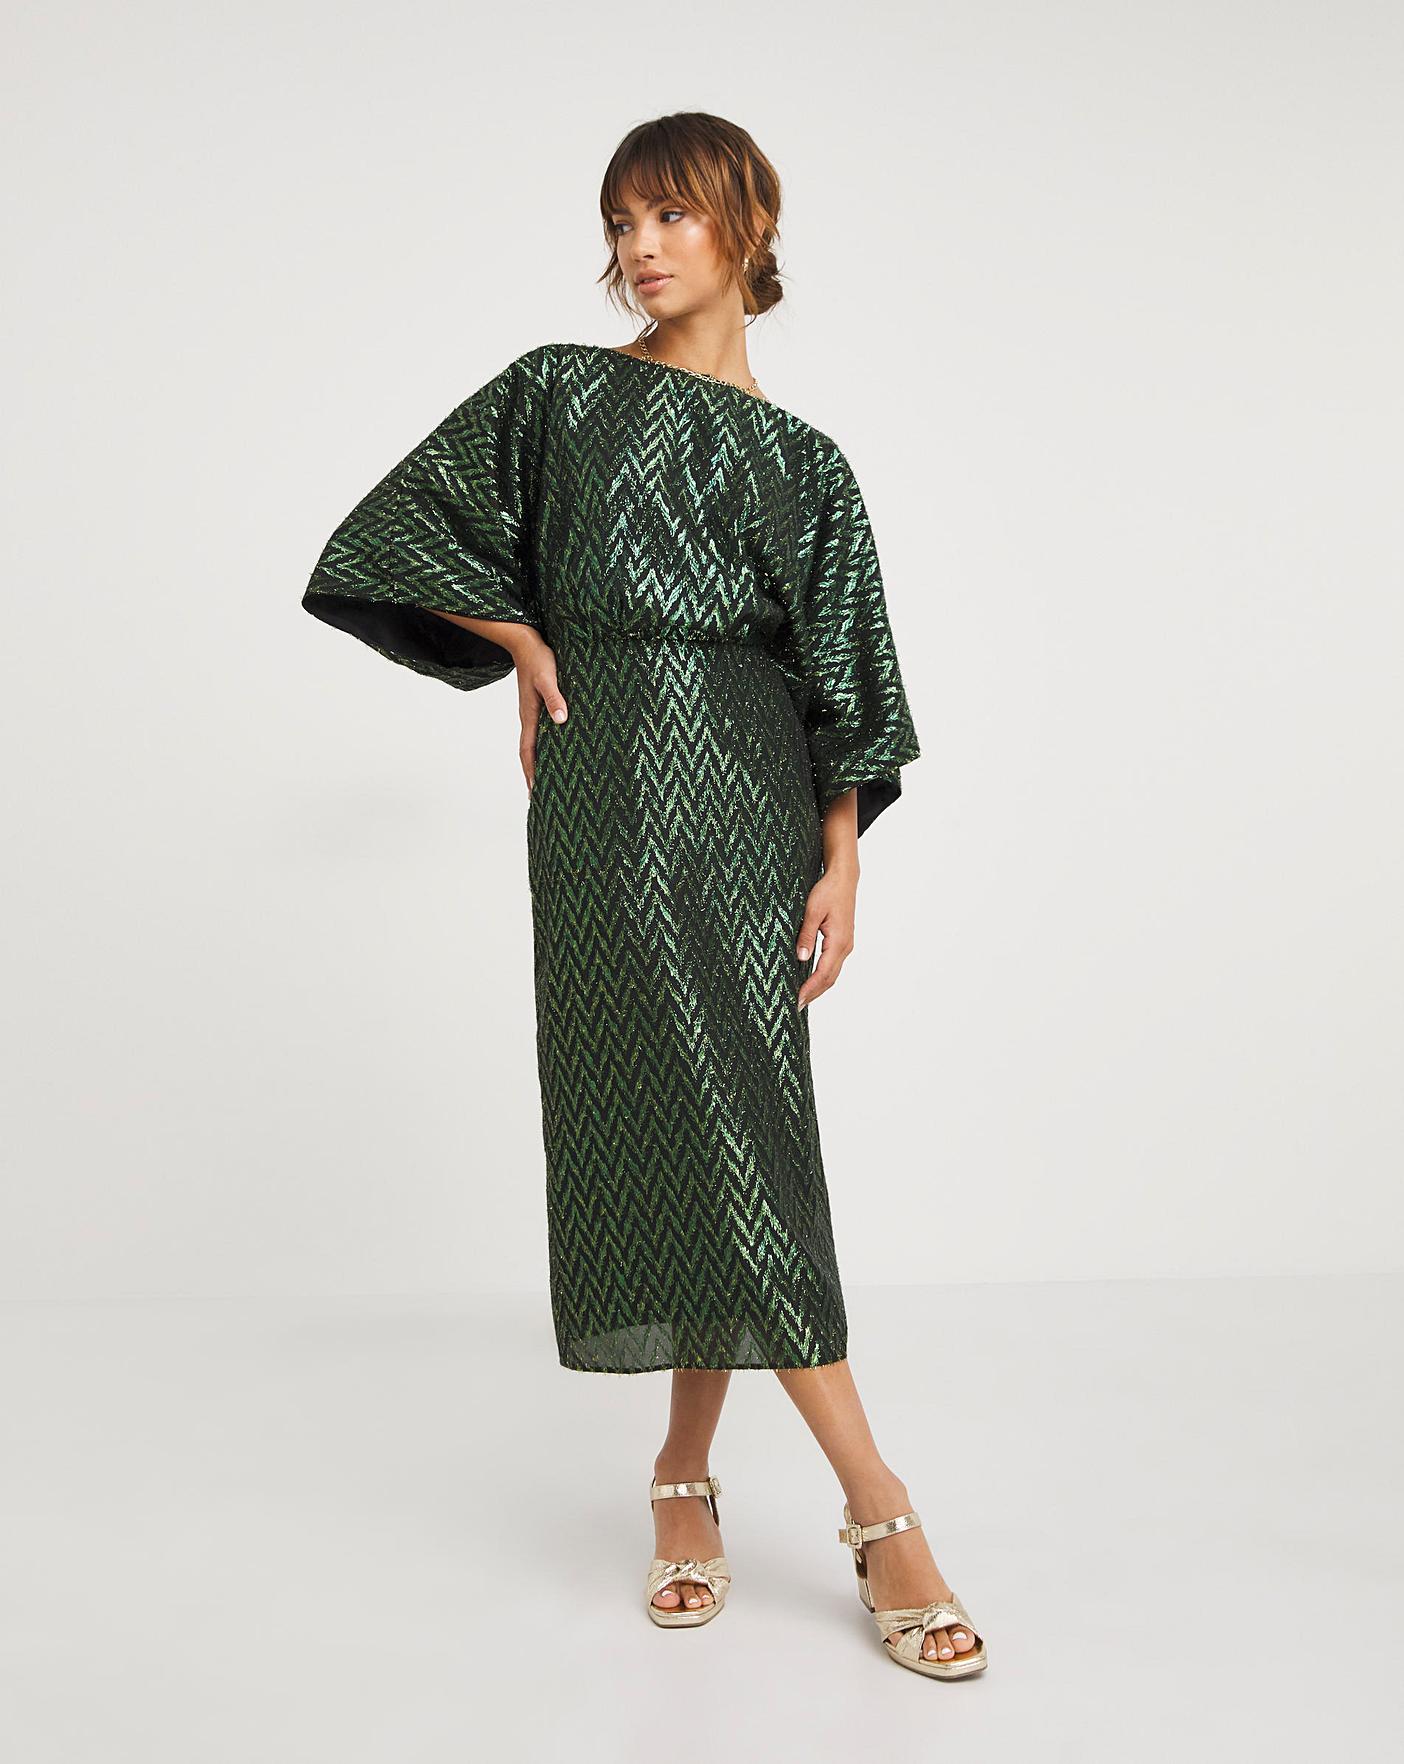 Joanna Hope Chevron Midi Dress | Oxendales